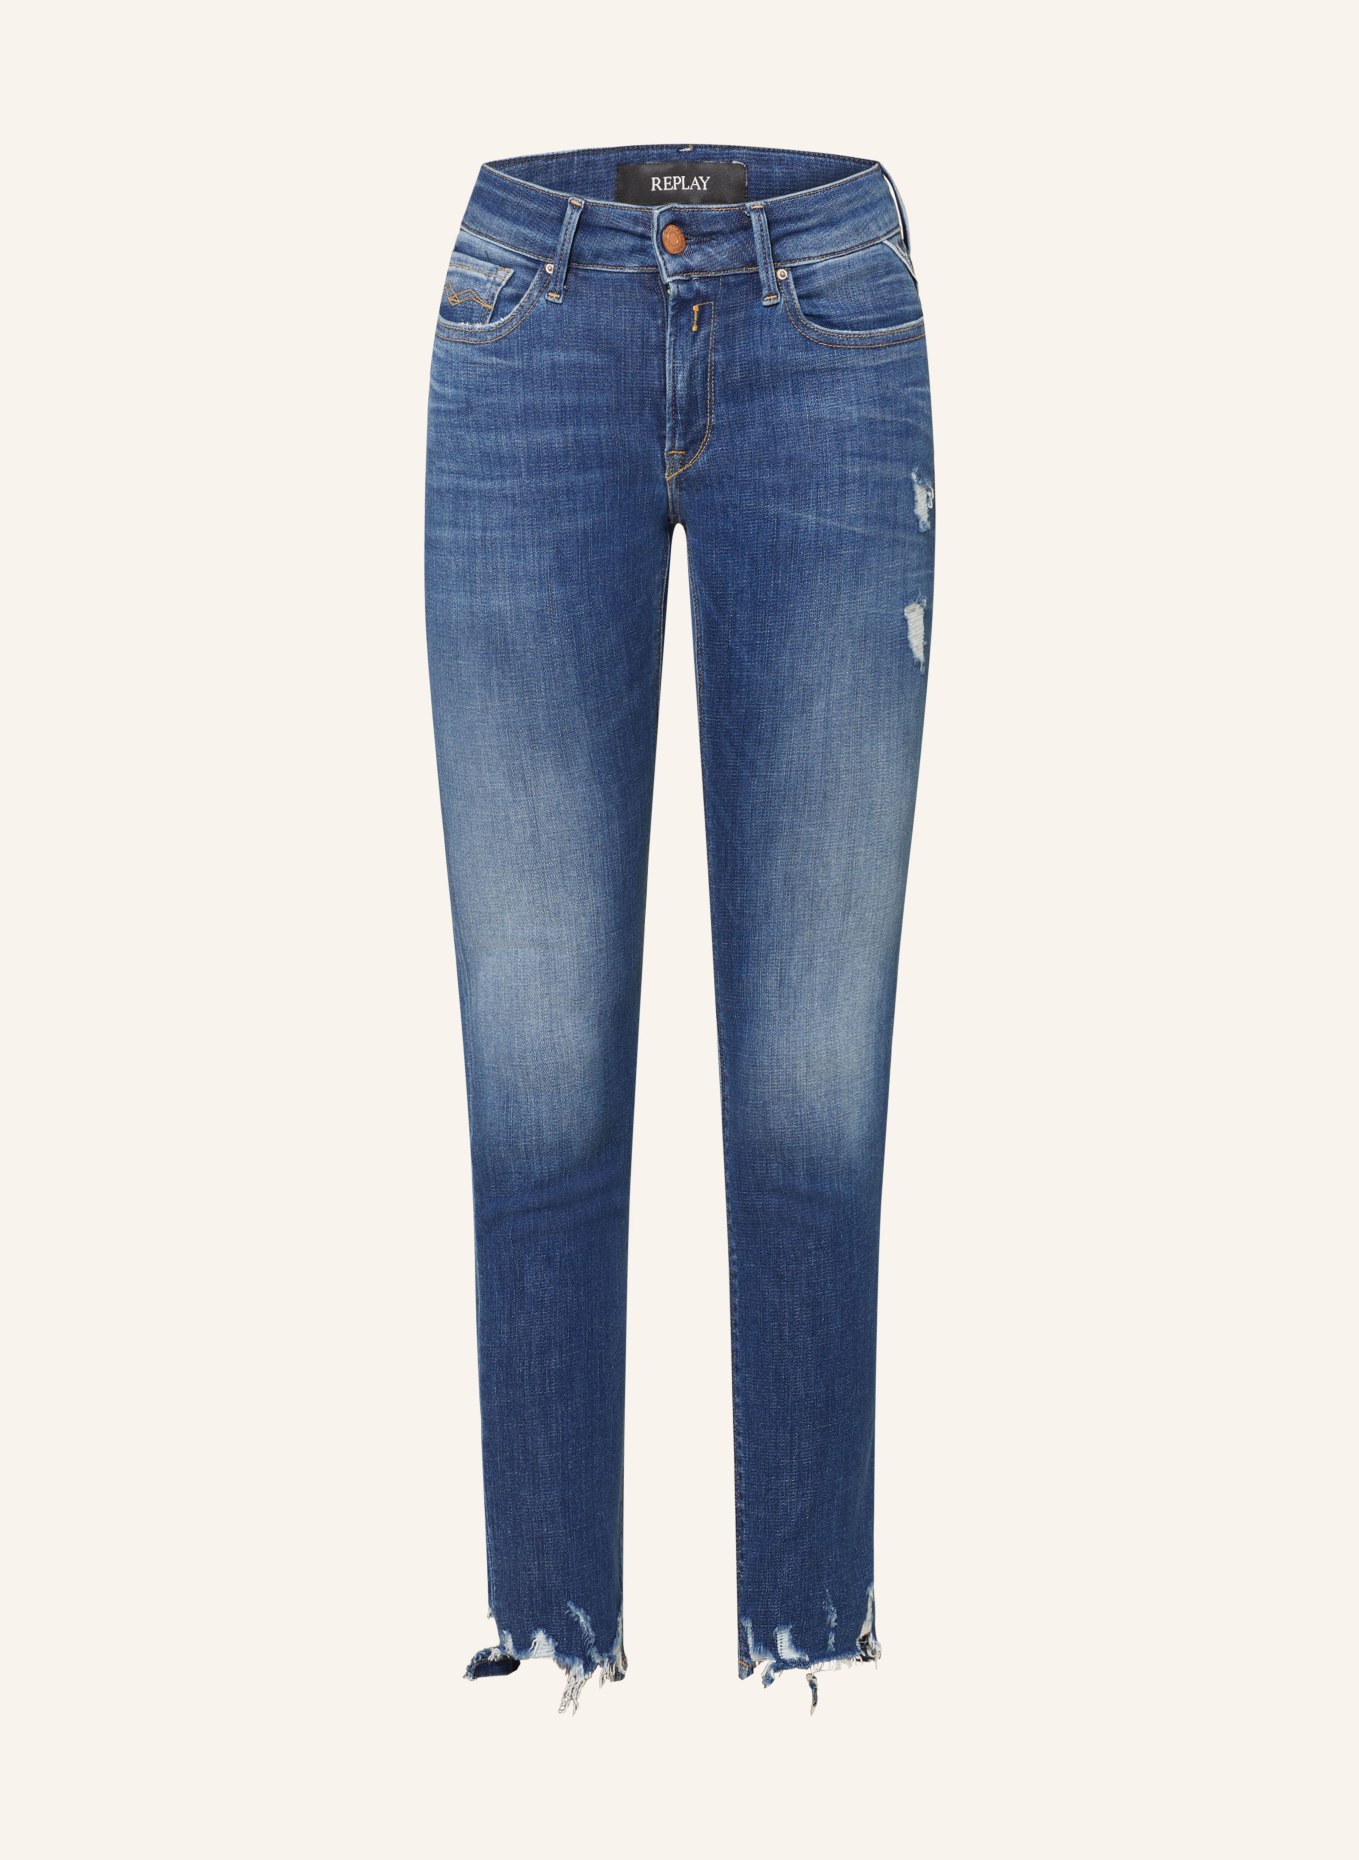 REPLAY Destroyed-Jeans NEW LUZ, Farbe: 009 MEDIUM BLUE (Bild 1)